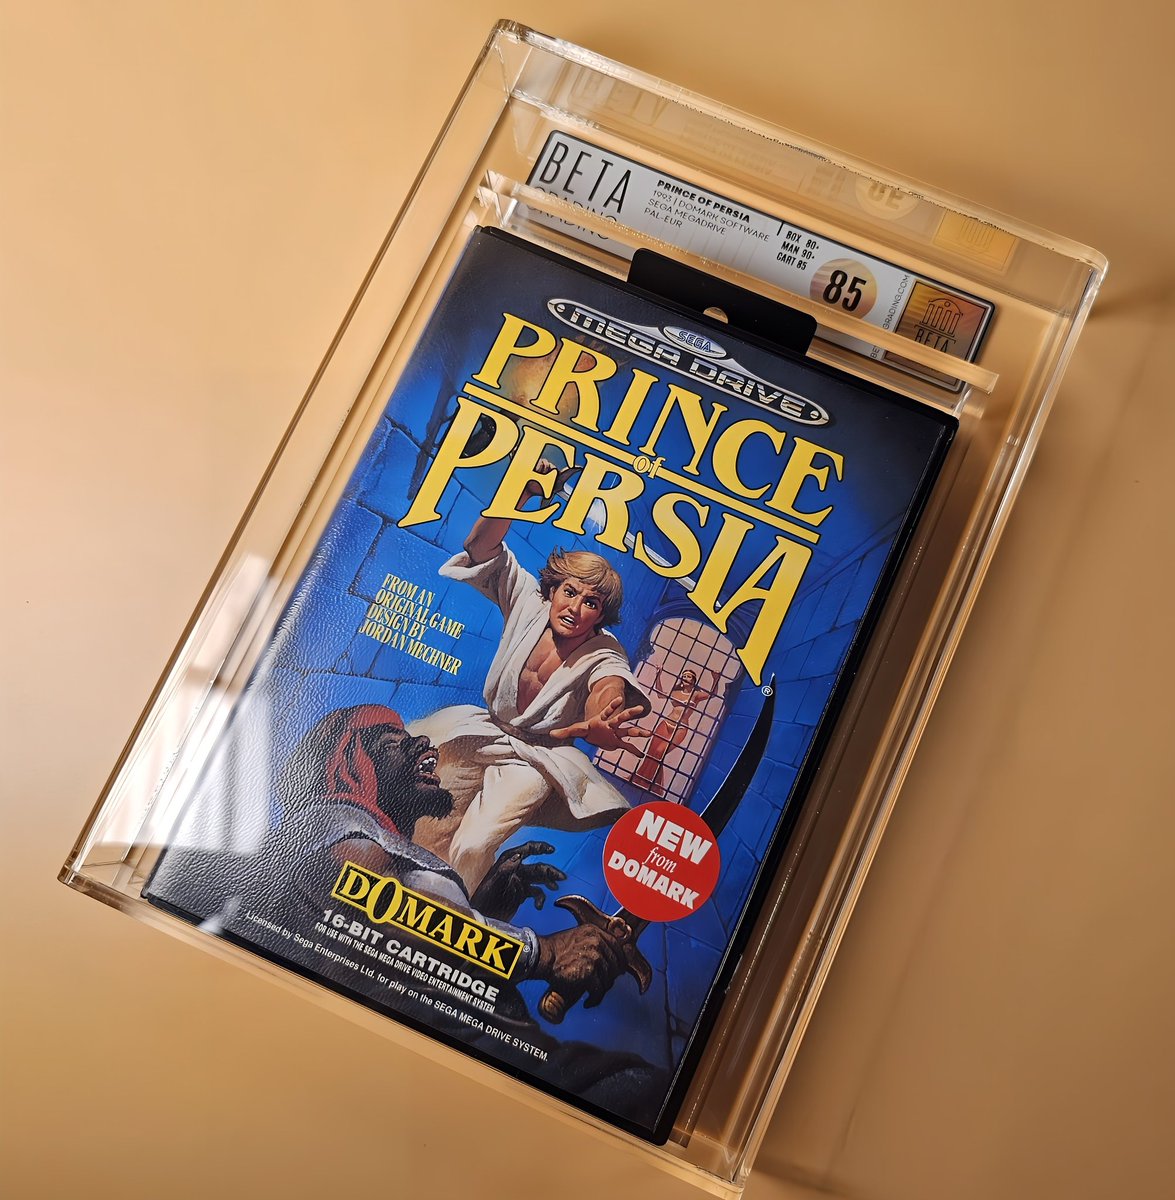 Prince Of Persia 1993 | Domark Software Sega MegaDrive PAL- EUR BG85 Owner: @LosRetroC_TV